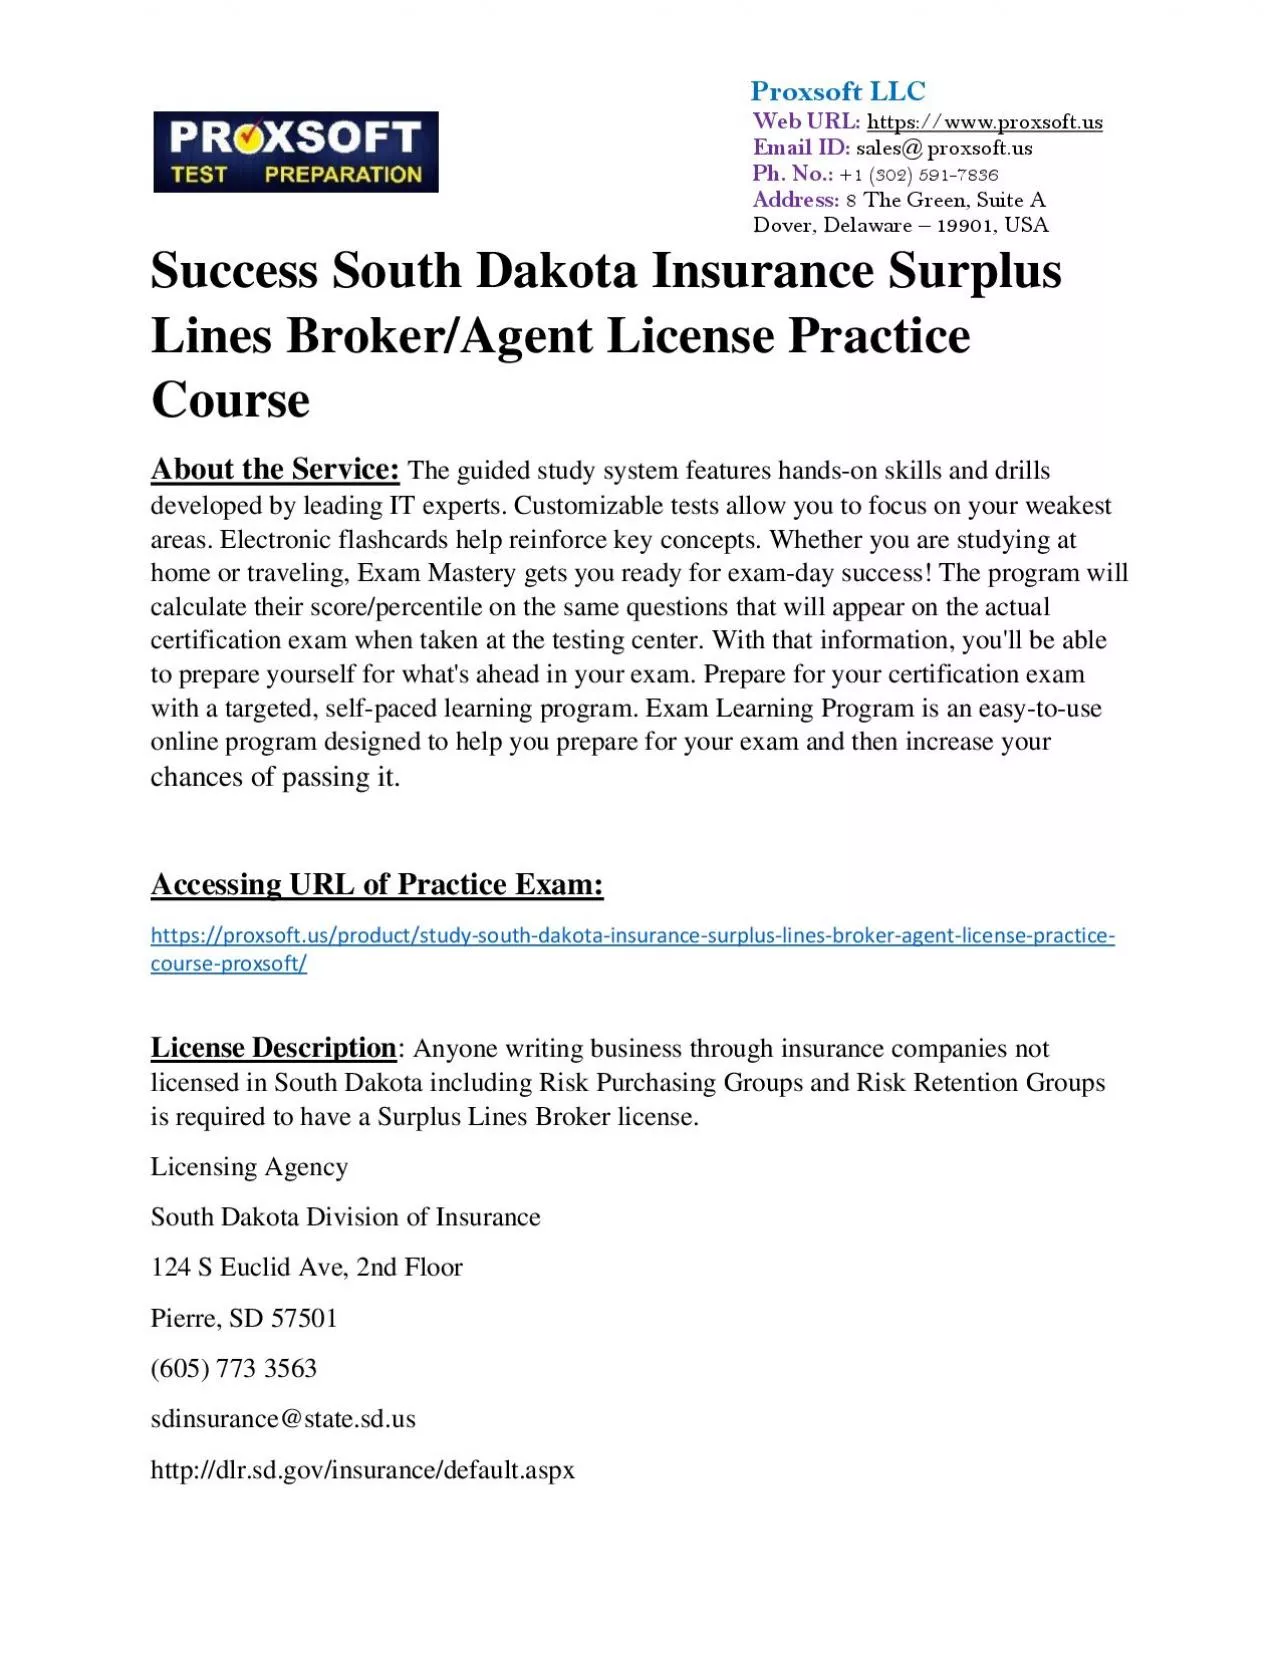 Success South Dakota Insurance Surplus Lines Broker/Agent License Practice Course